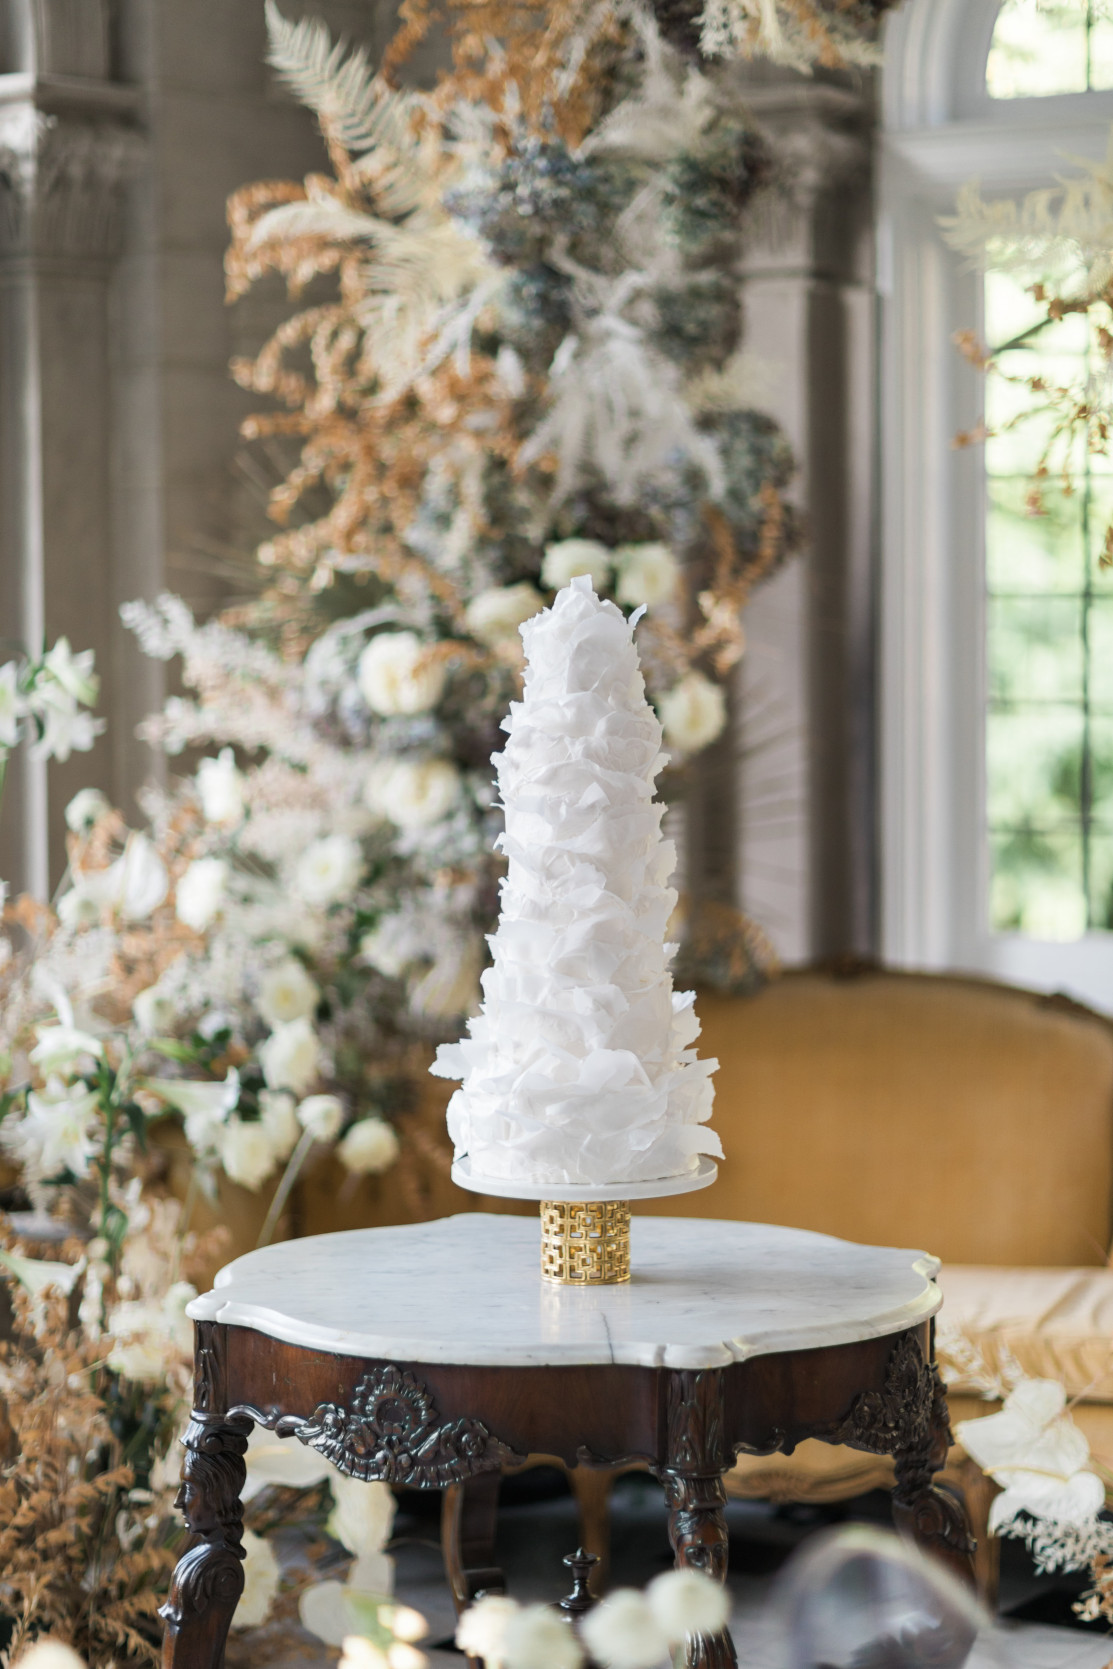 Delicate sugar ruffles wedding cake. Created for a beautiful micro wedding in a historic venue.